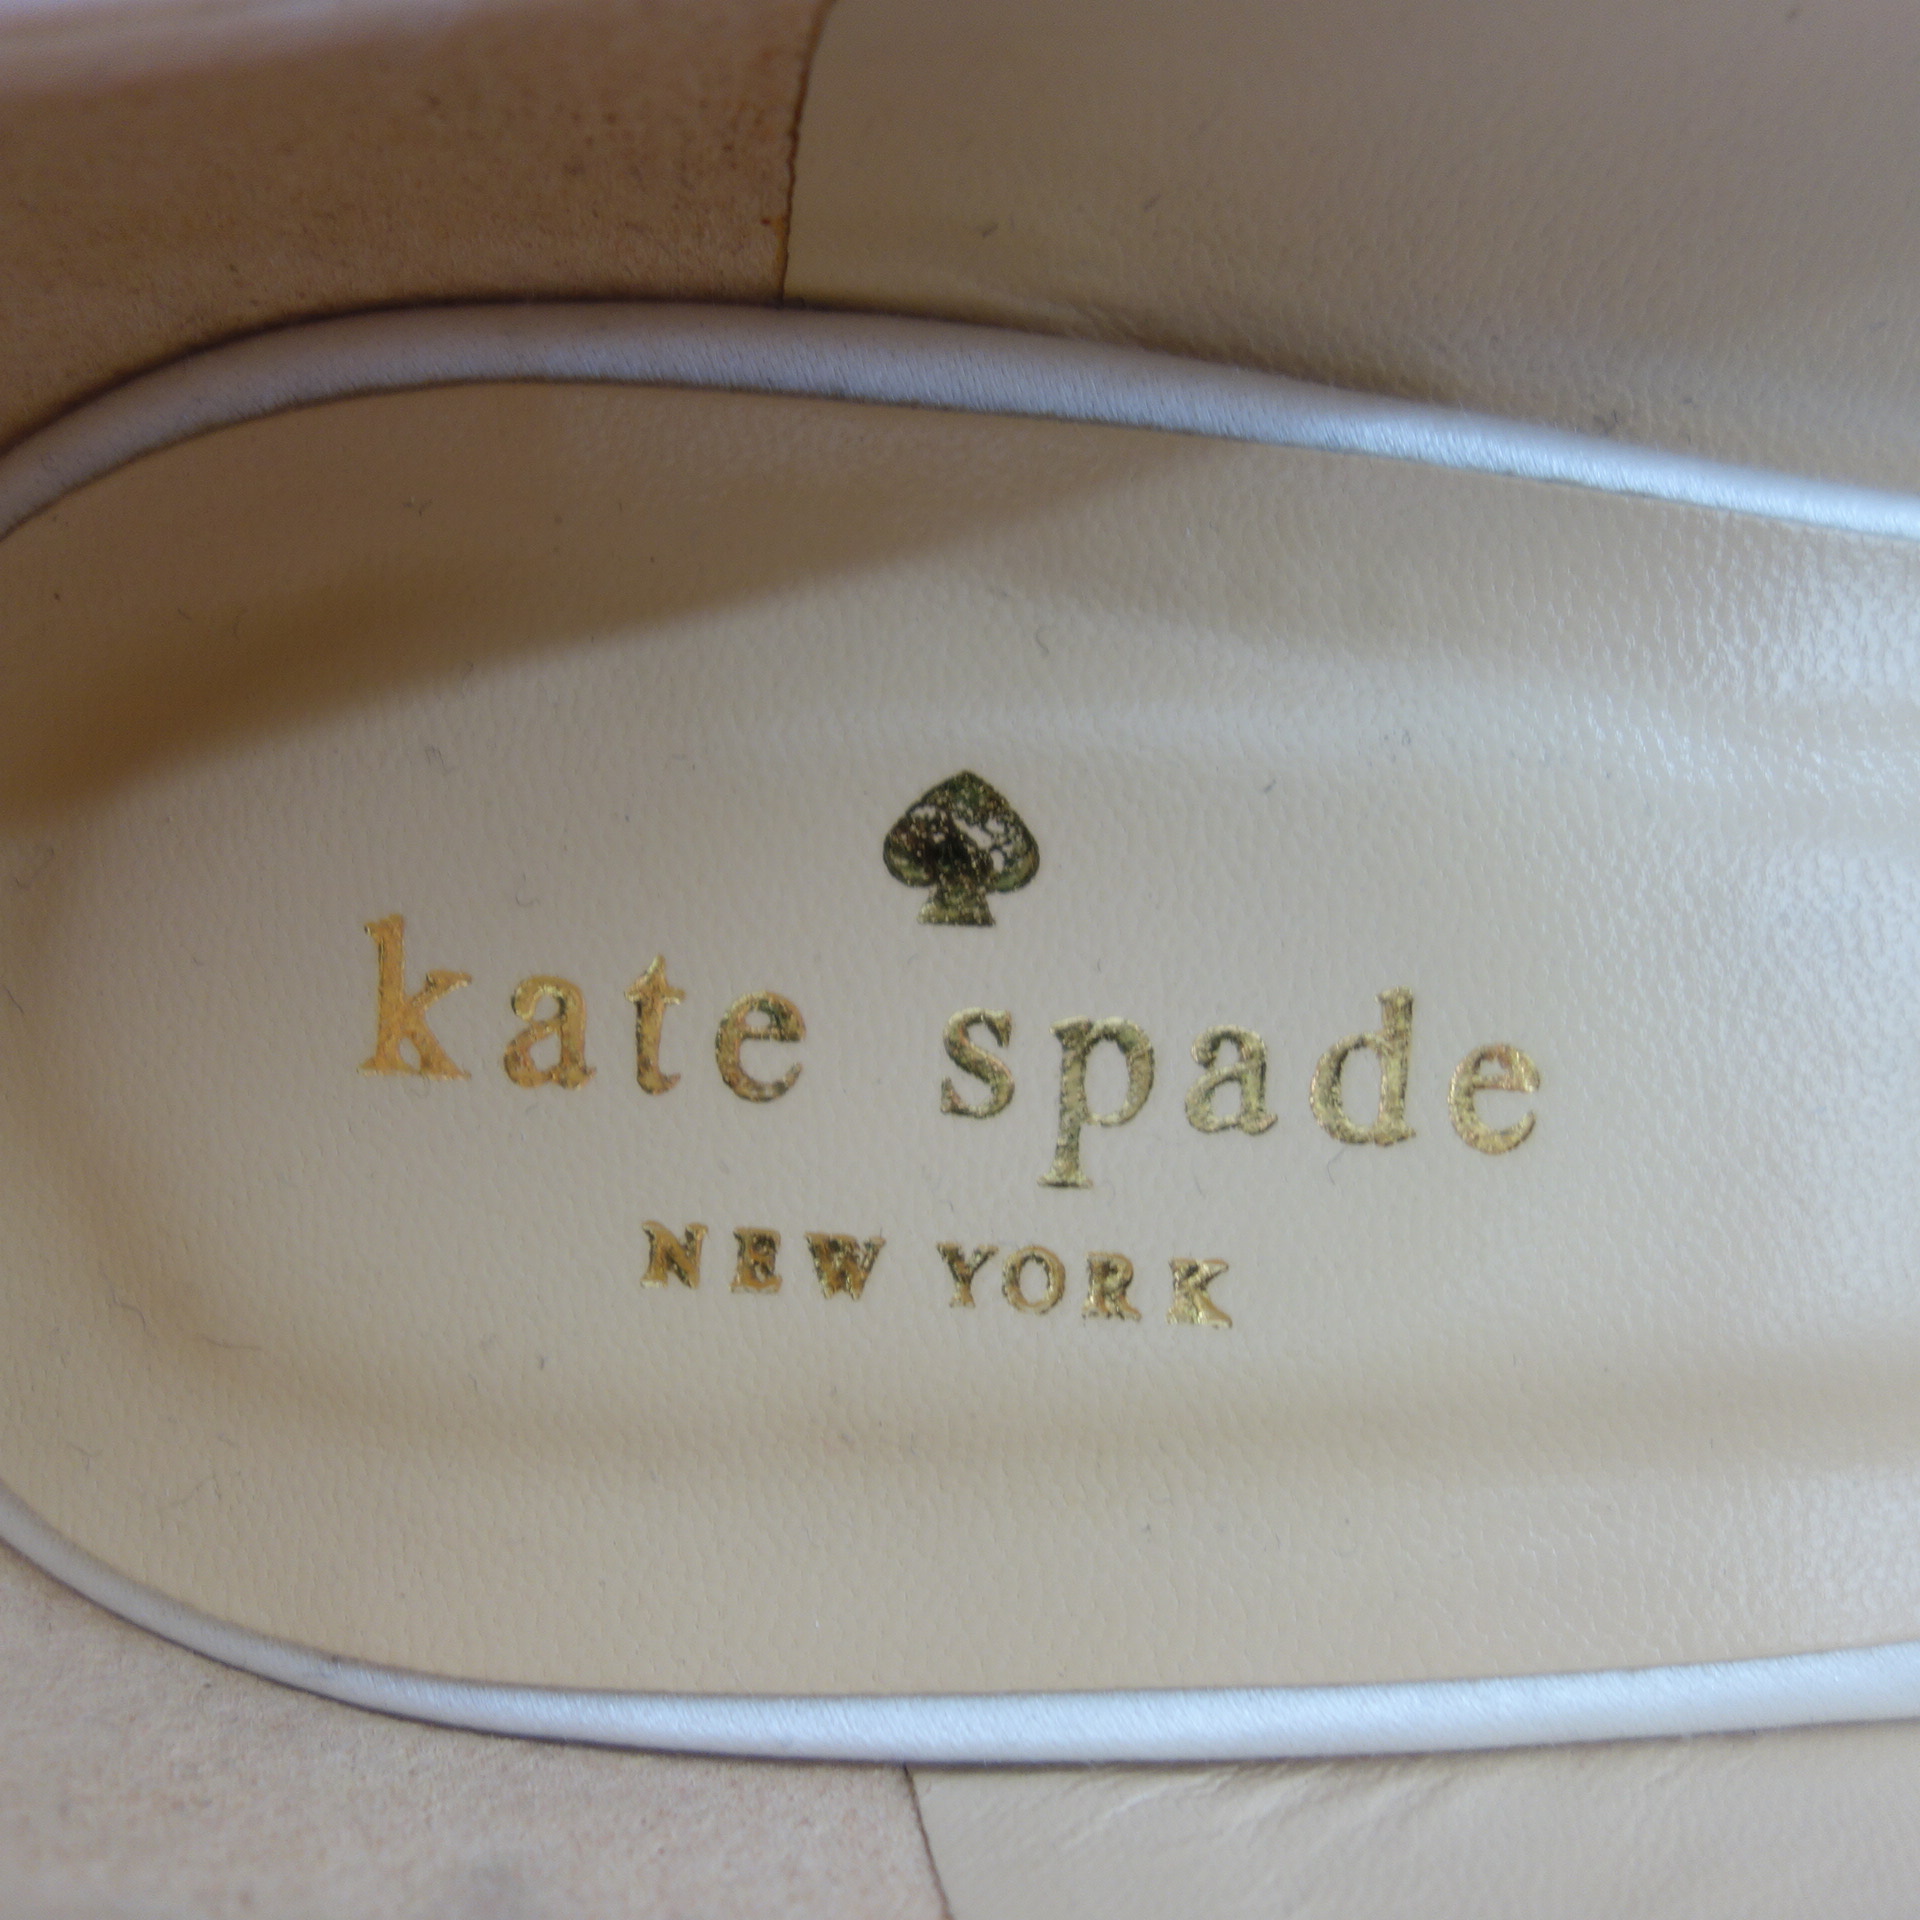 KATE SPADE New York Damen Schuhe Damenschuhe Satin Creme Peeptoe Modell BILLIE Größe 37,5